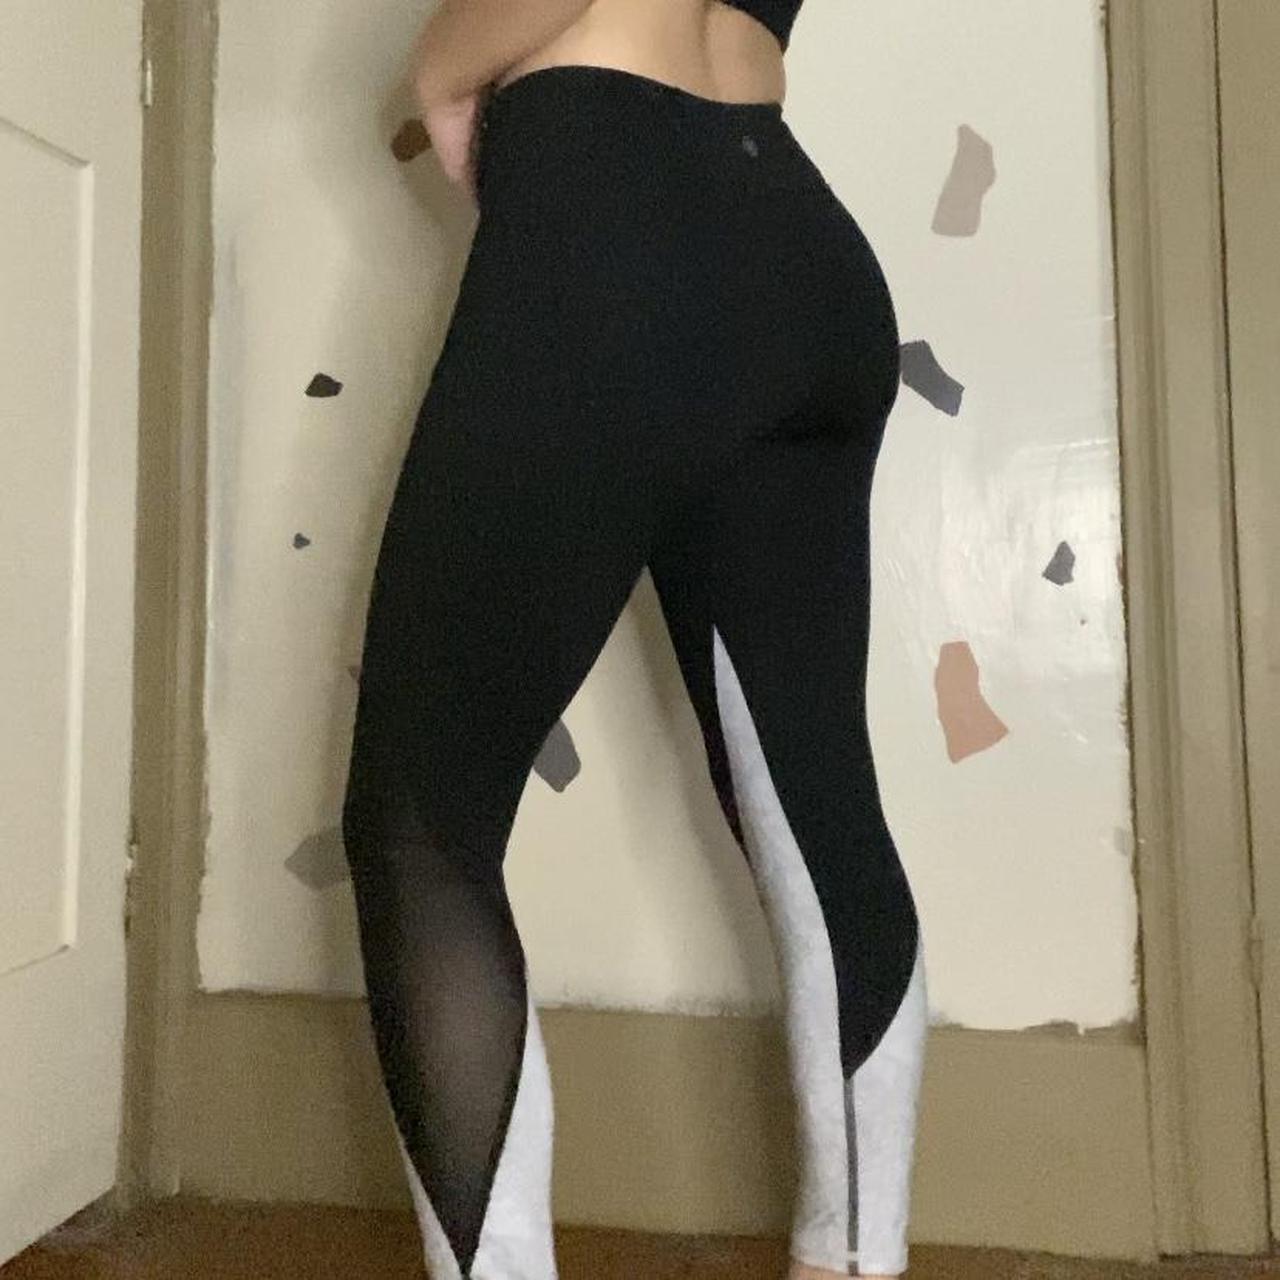 XS black athletic leggings, white and black mesh design - Depop